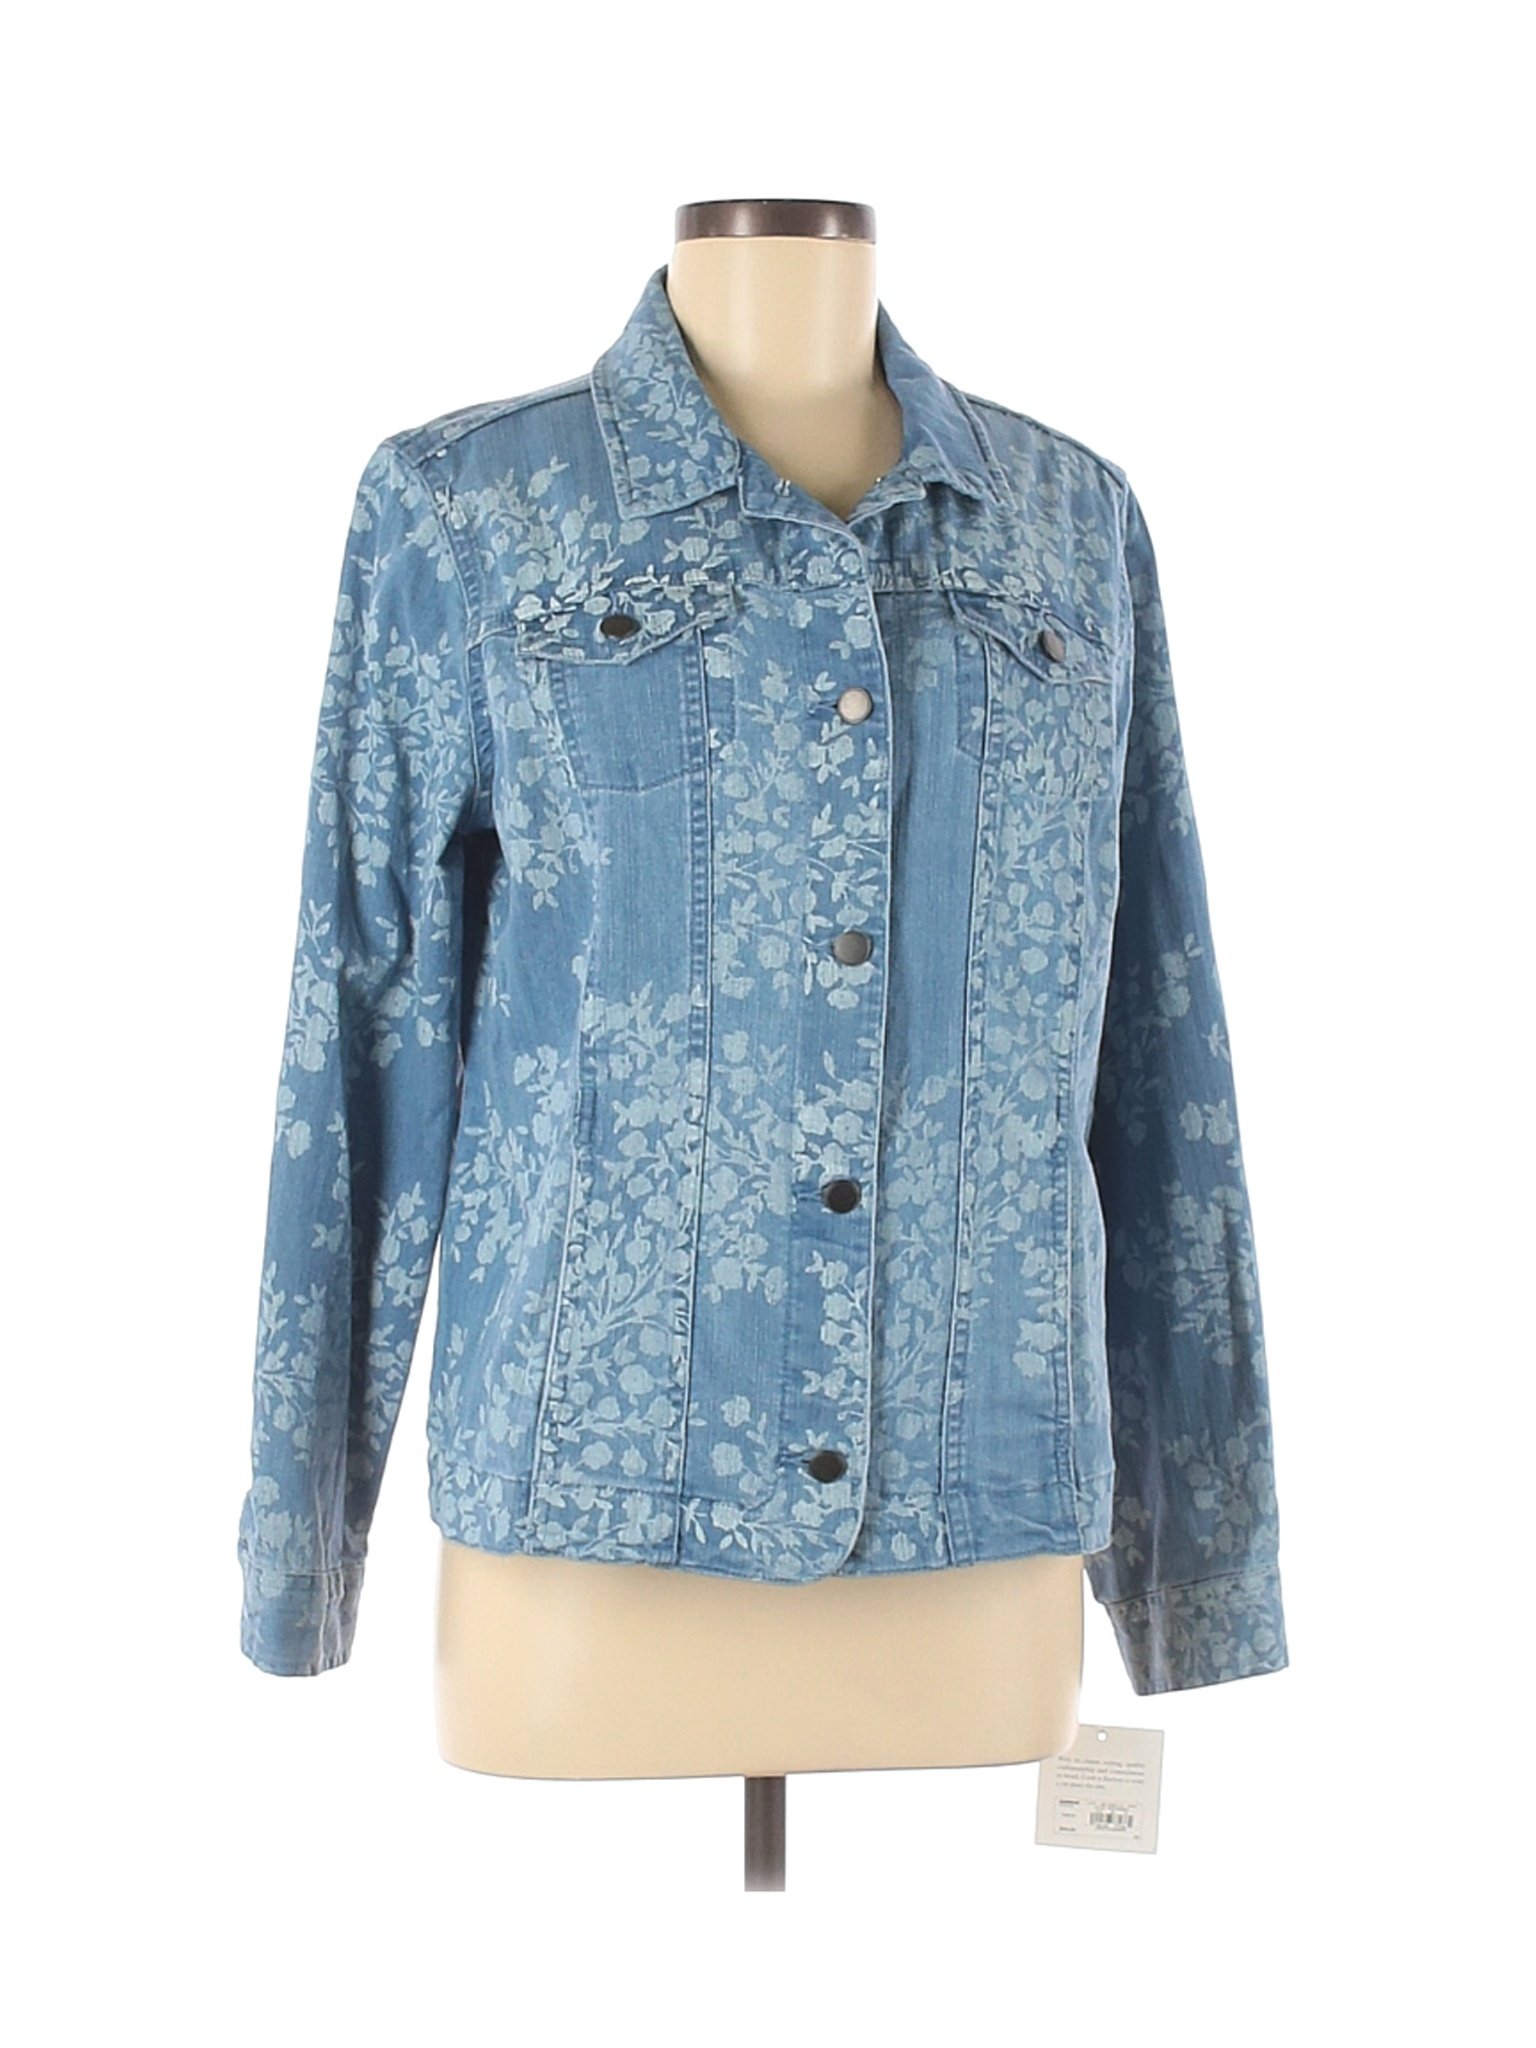 Croft & Barrow Women Blue Denim Jacket M | eBay